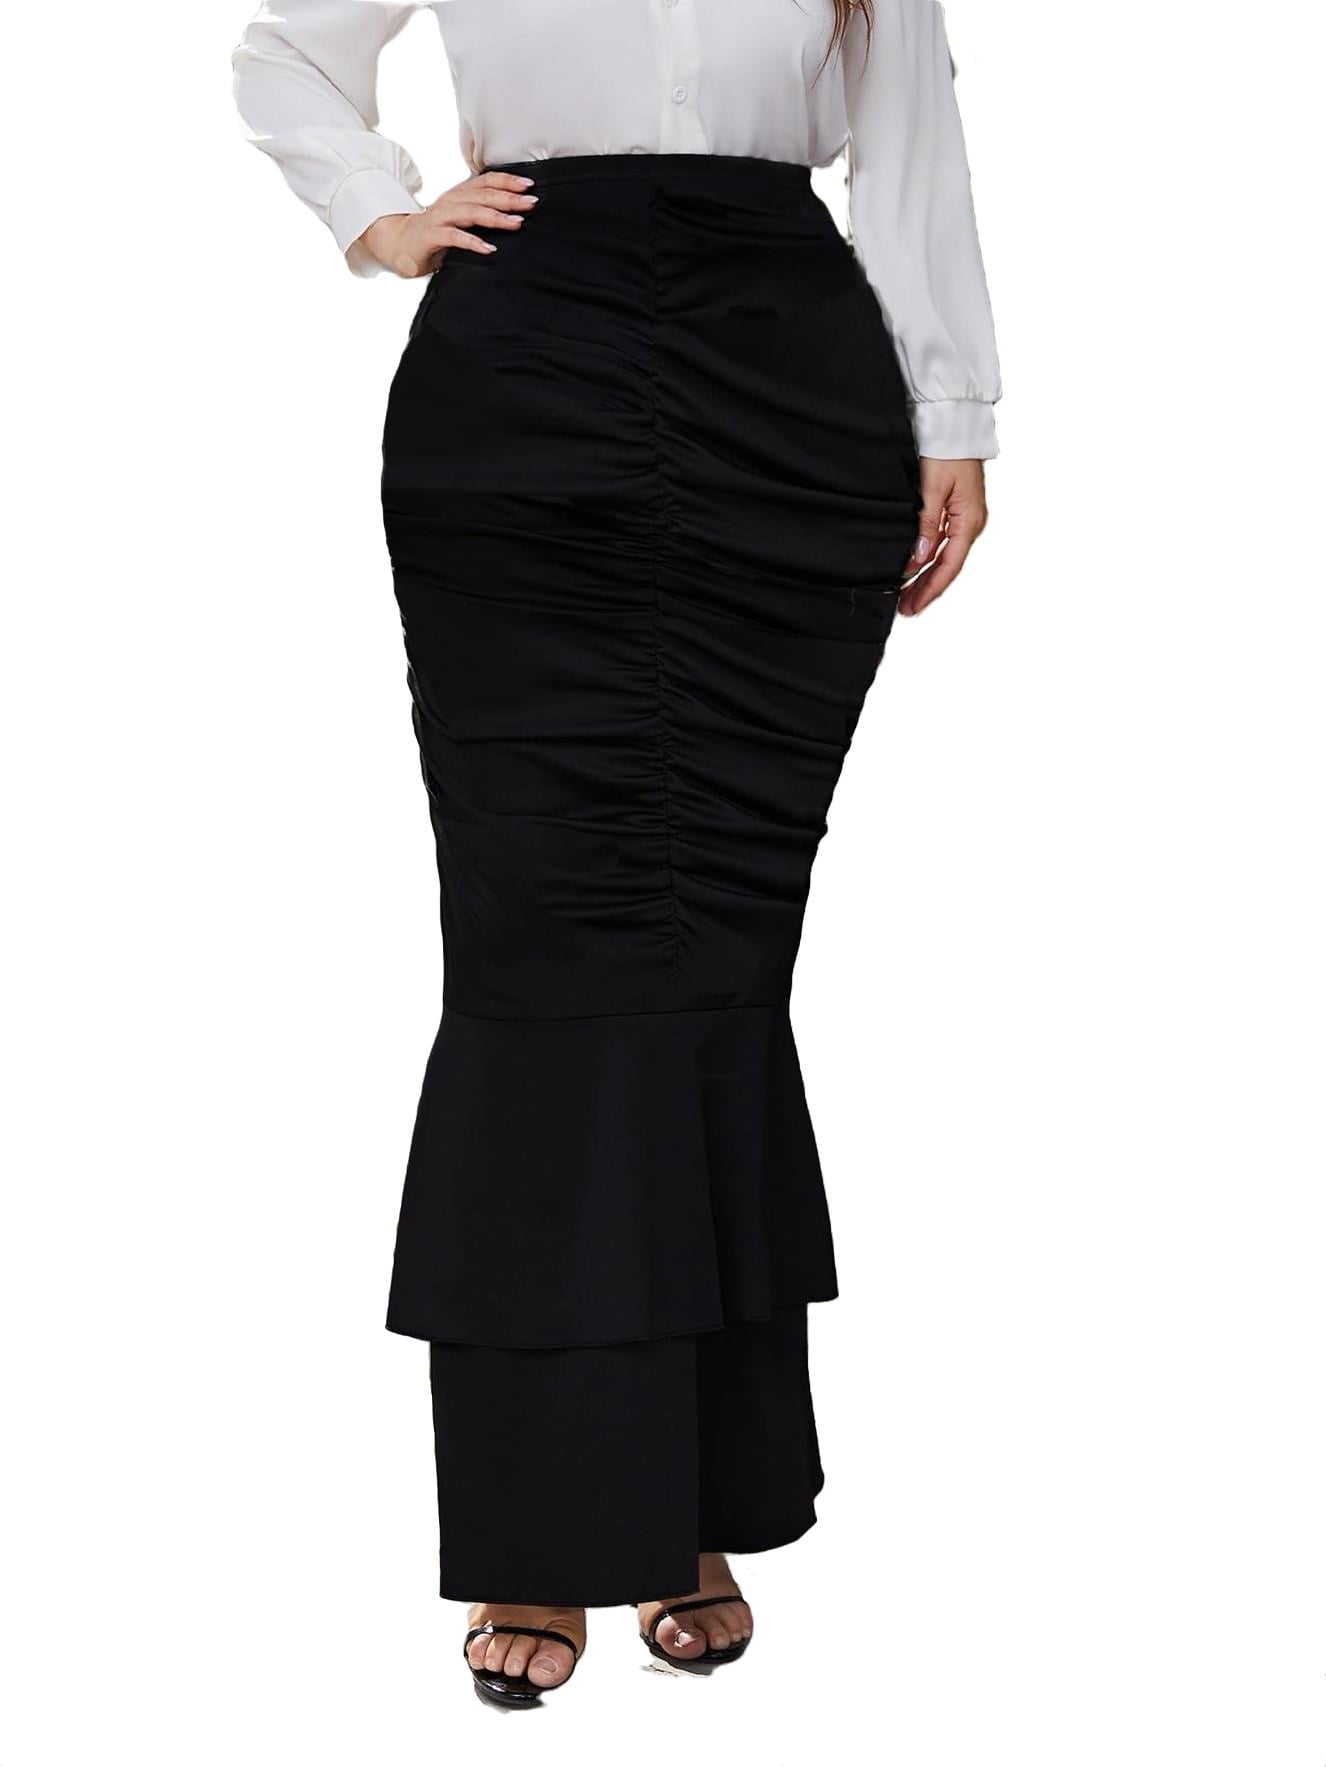 Elegant Solid Mermaid Black Plus Size Skirts (Women's) - Walmart.com